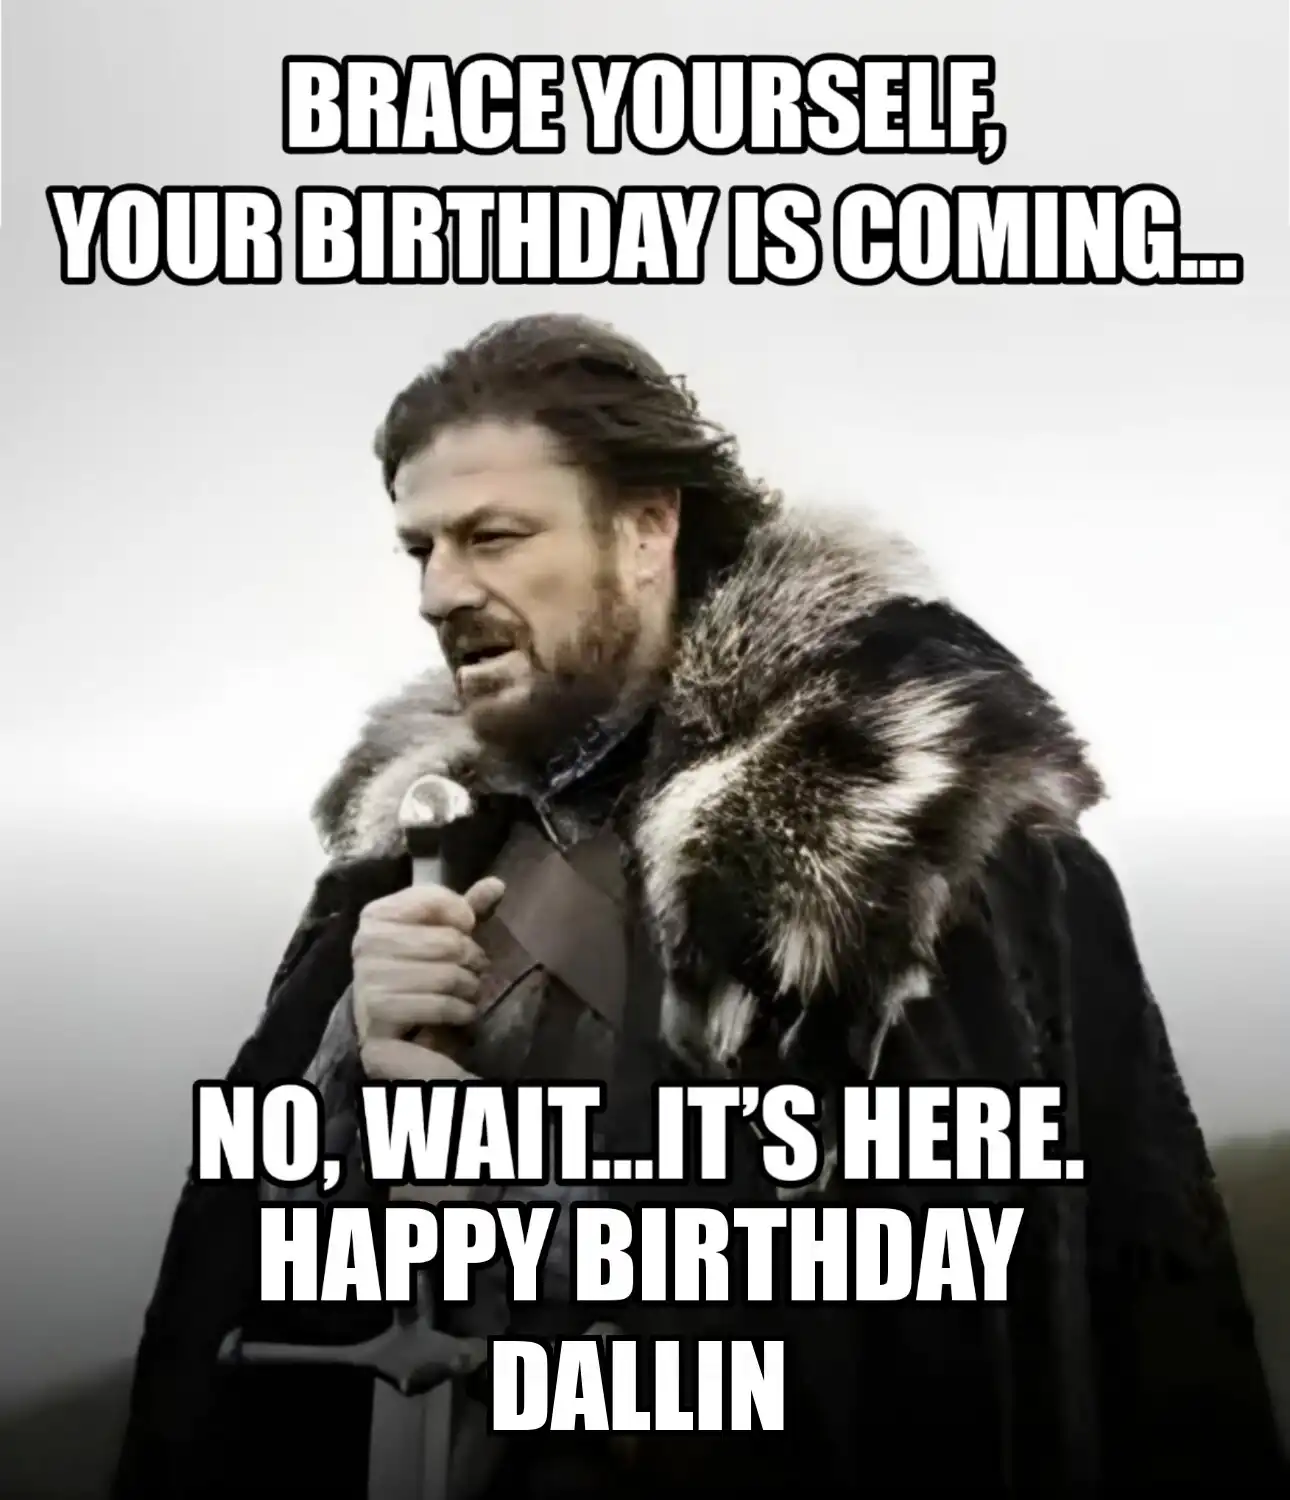 Happy Birthday Dallin Brace Yourself Your Birthday Is Coming Meme